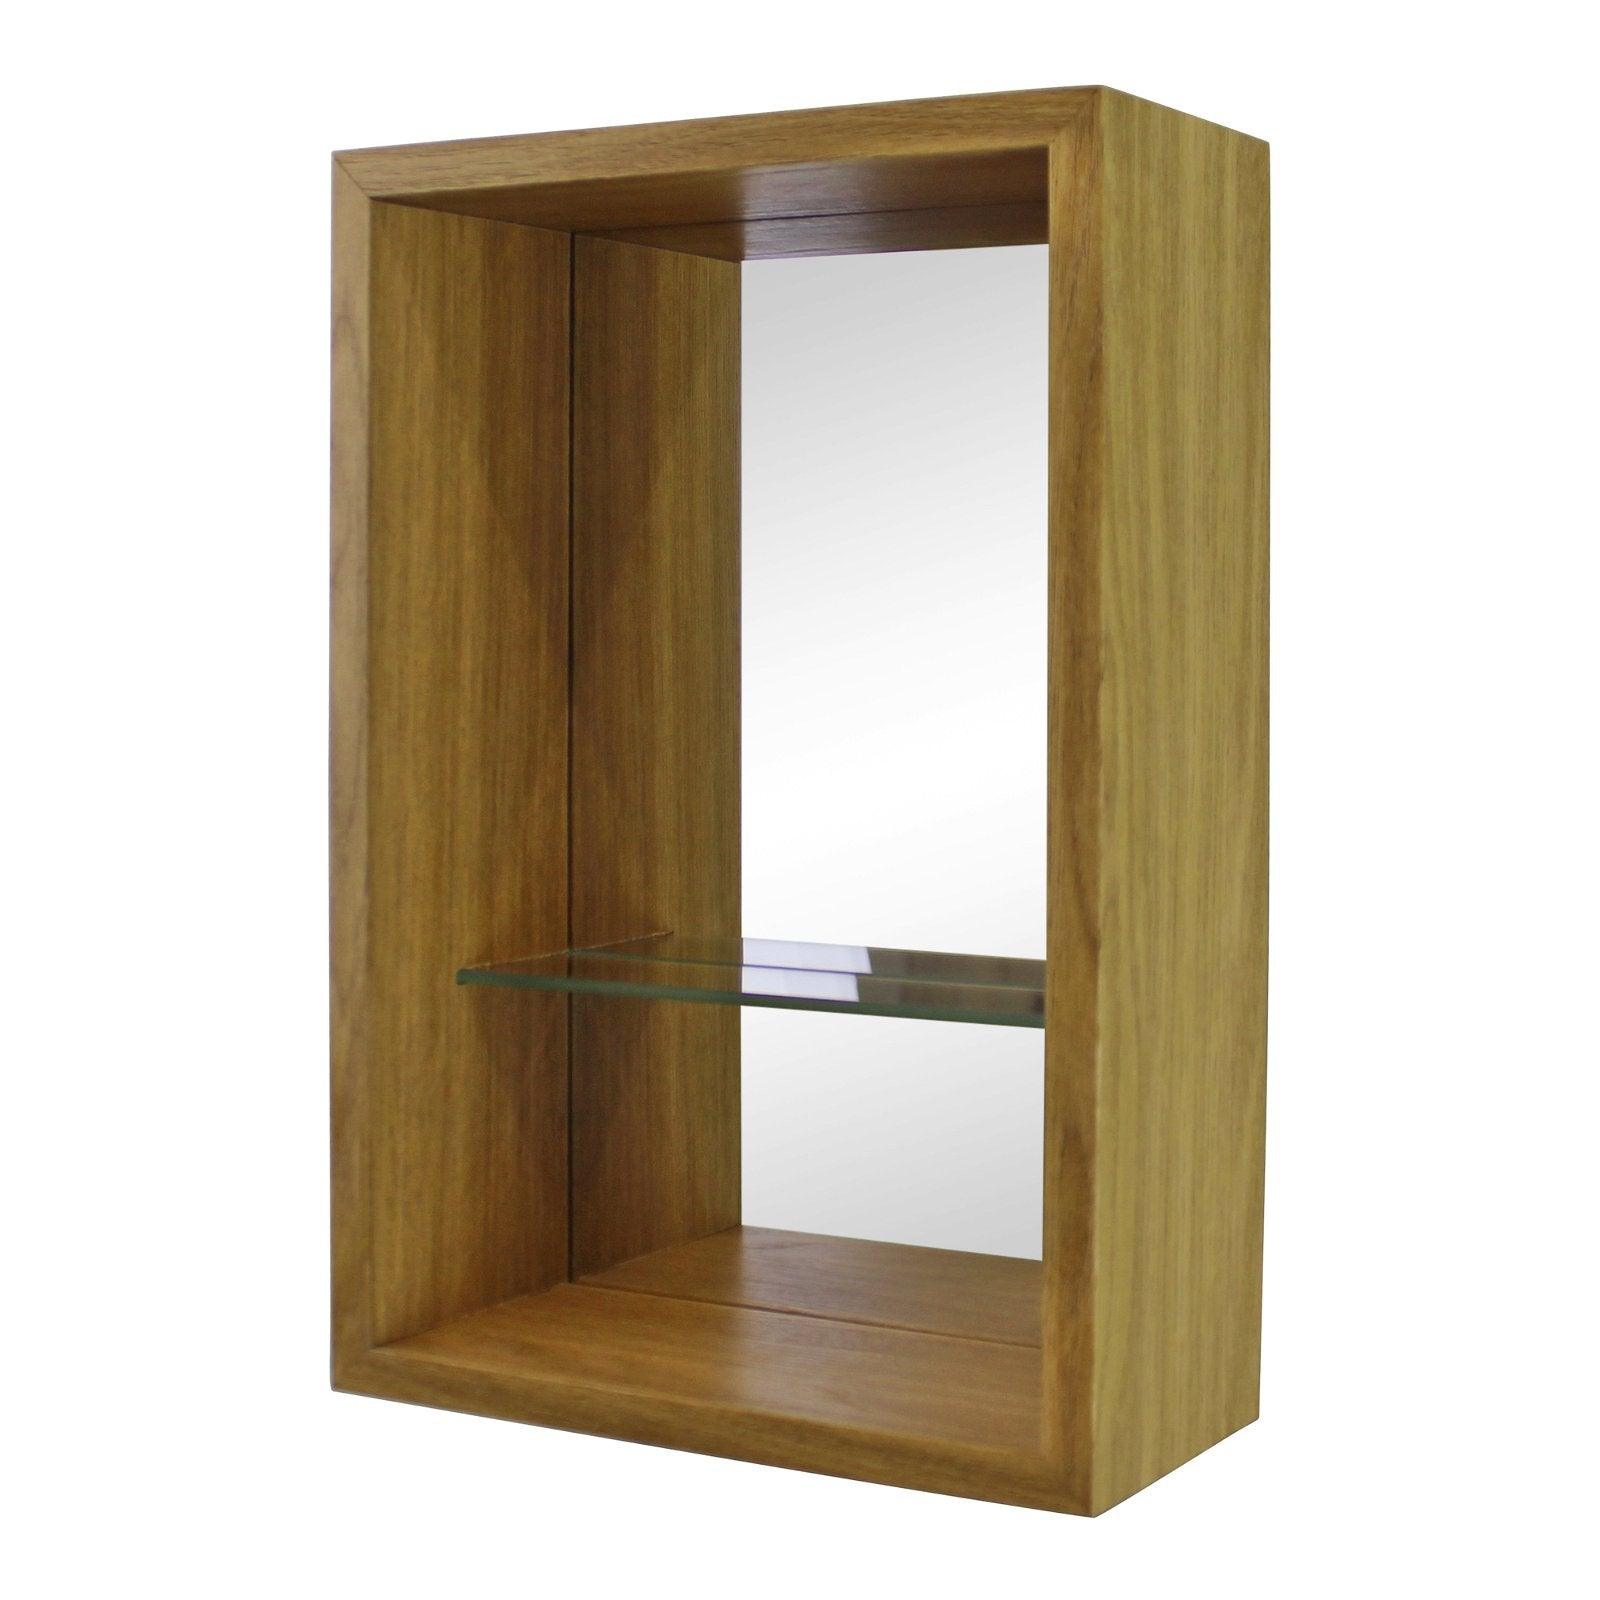 View Small Veneered Mirror Shelf Unit 31x21cm information